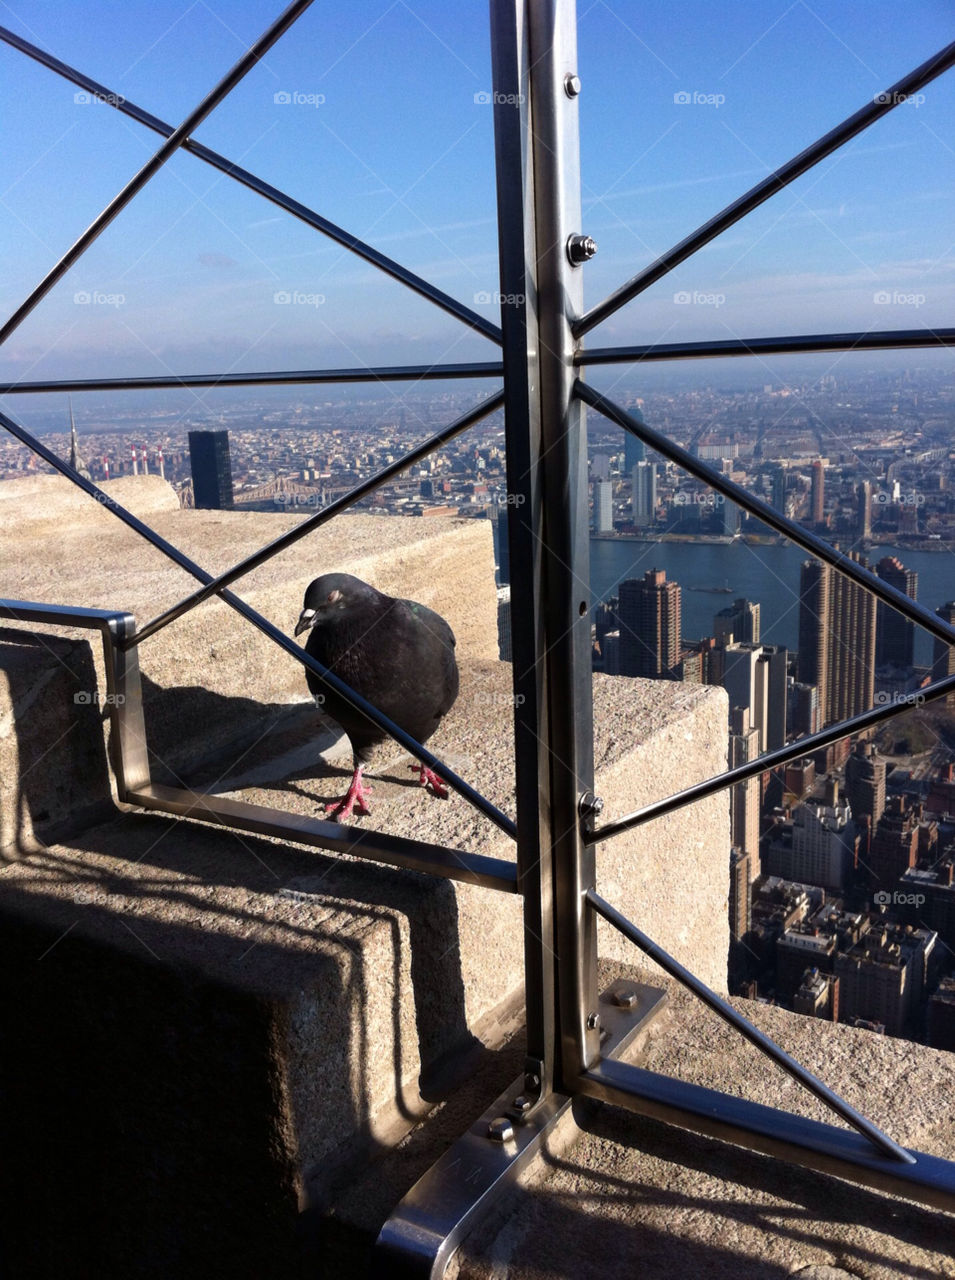 skyline pigeon empire state building empire state building manhattan new york by craig_franklin